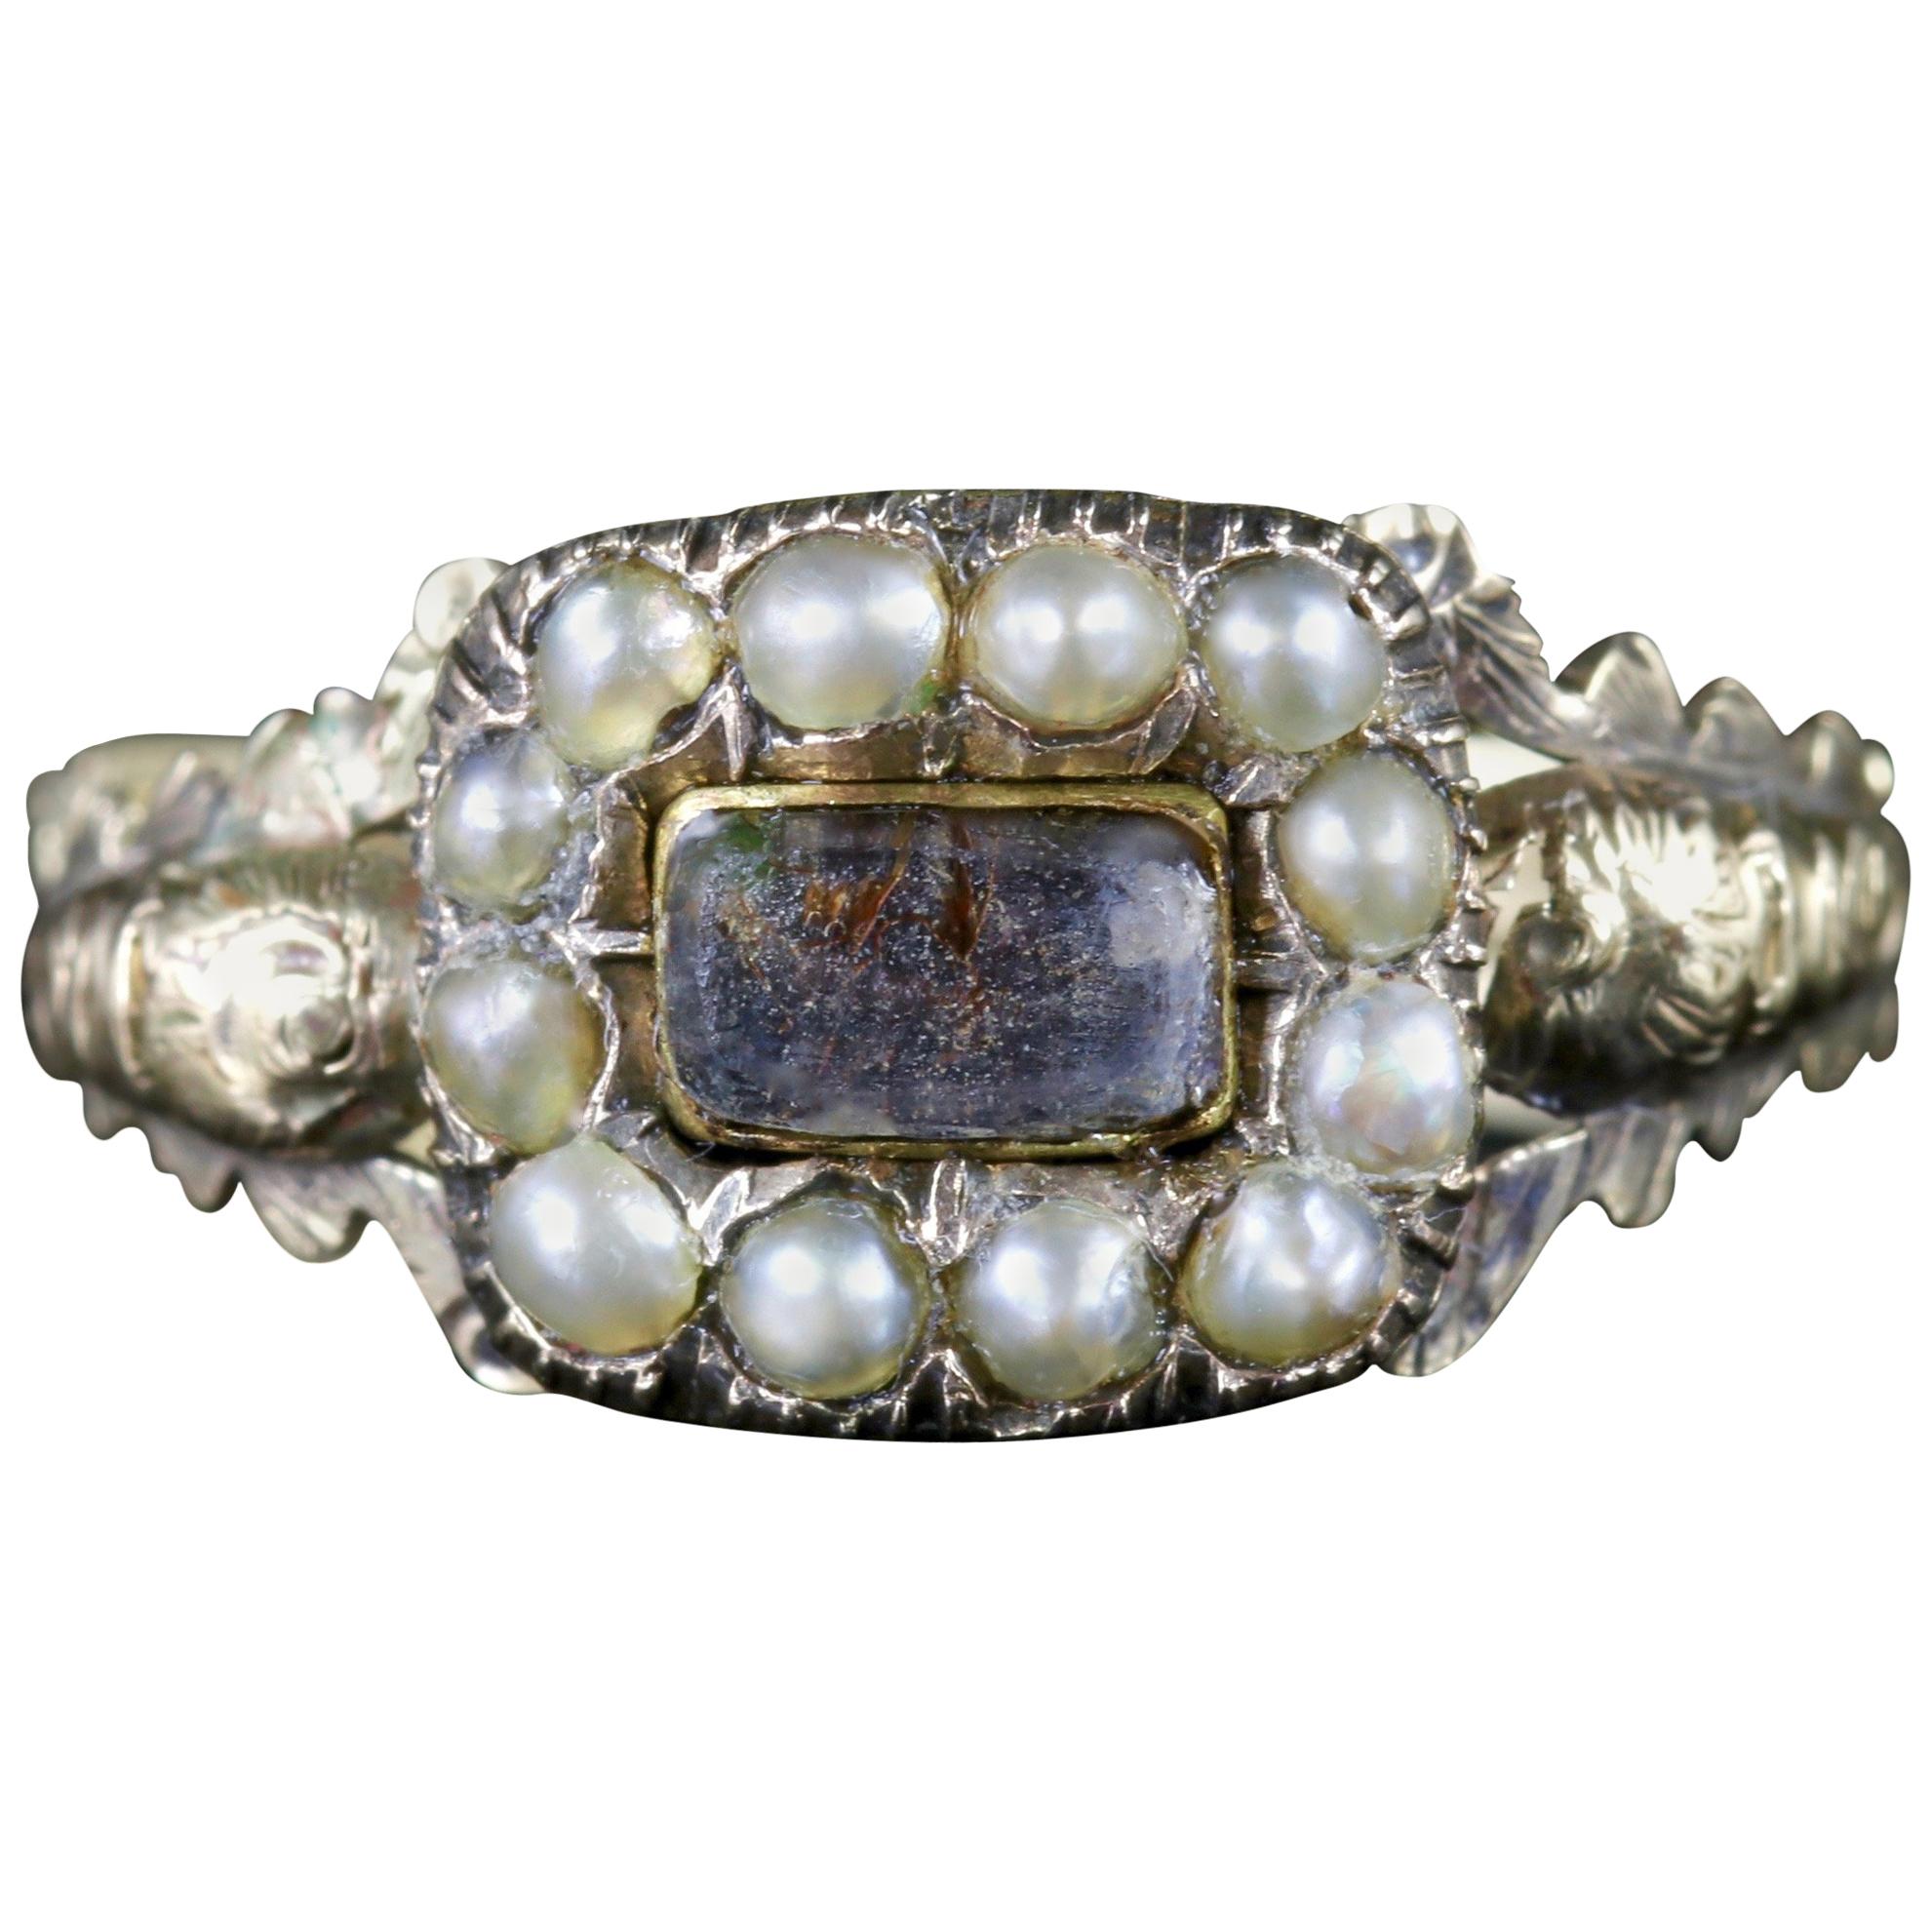 Antique Georgian Mourning Pearl Ring, circa 1800